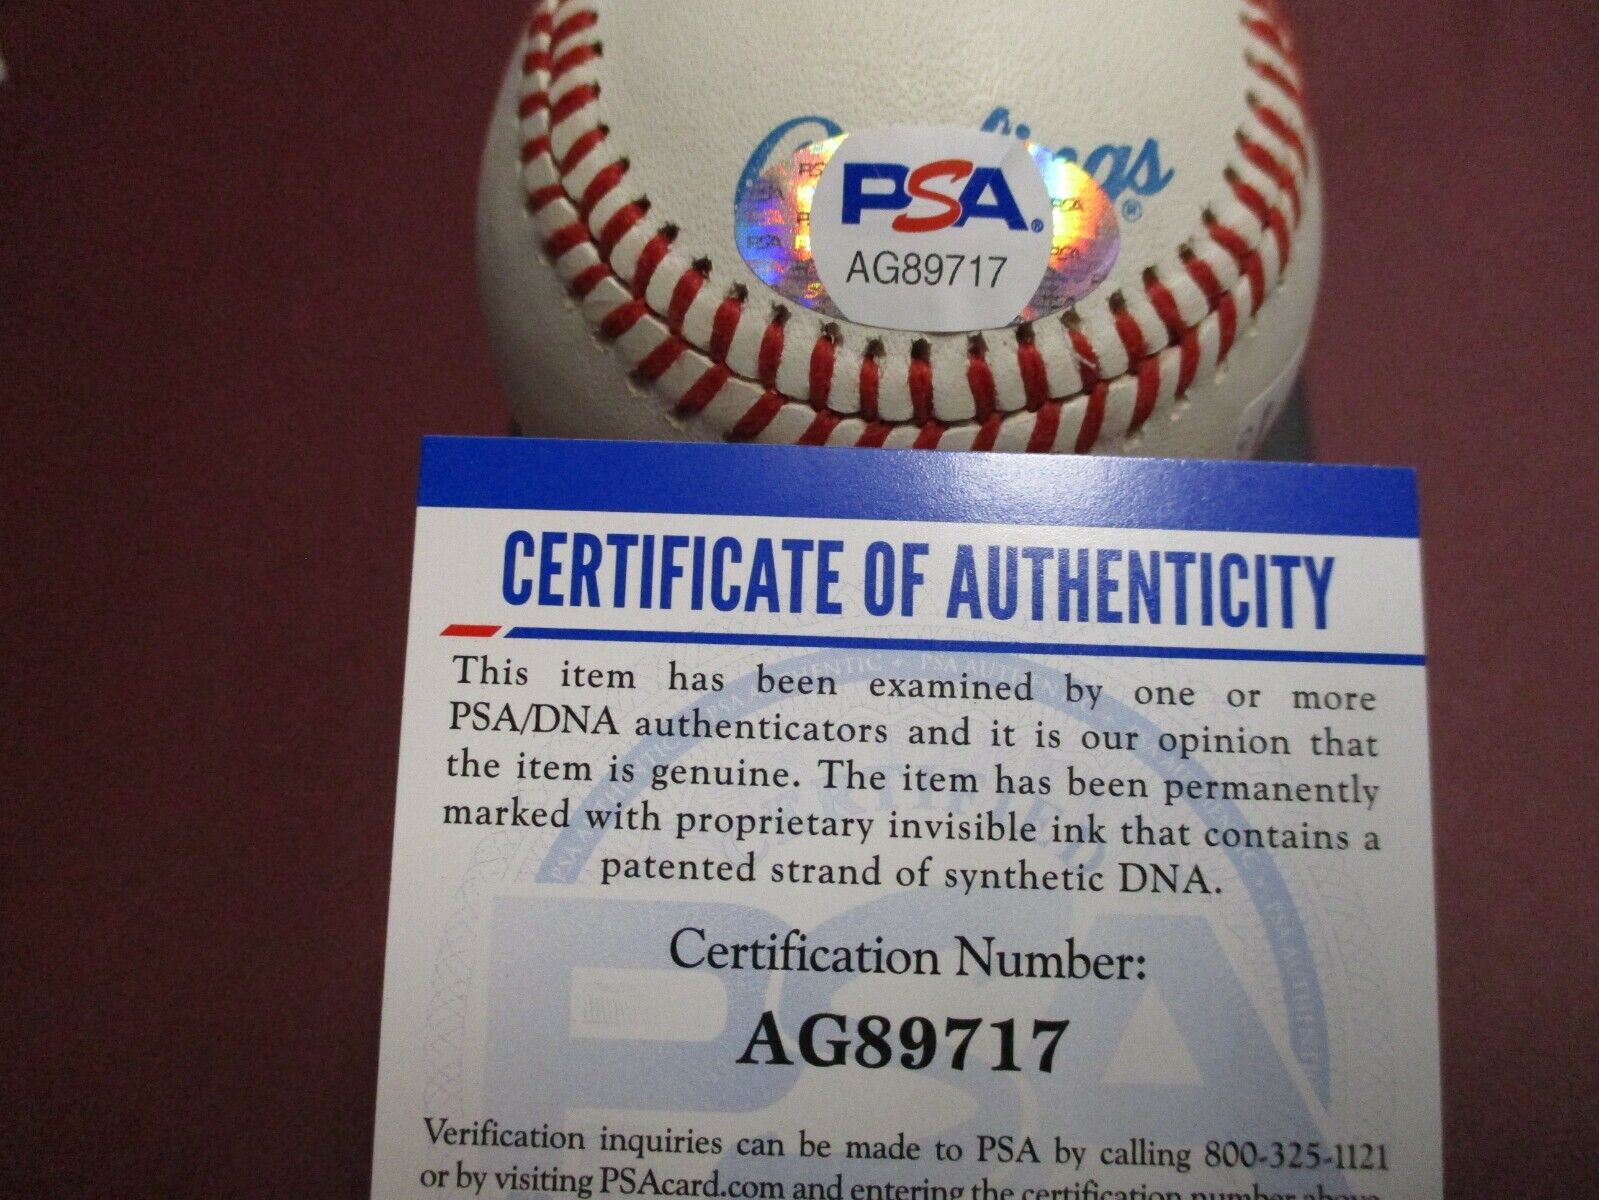 Johnny Mize Yankees Cardinals Autographed Official Ball Signed Baseball PSA COA